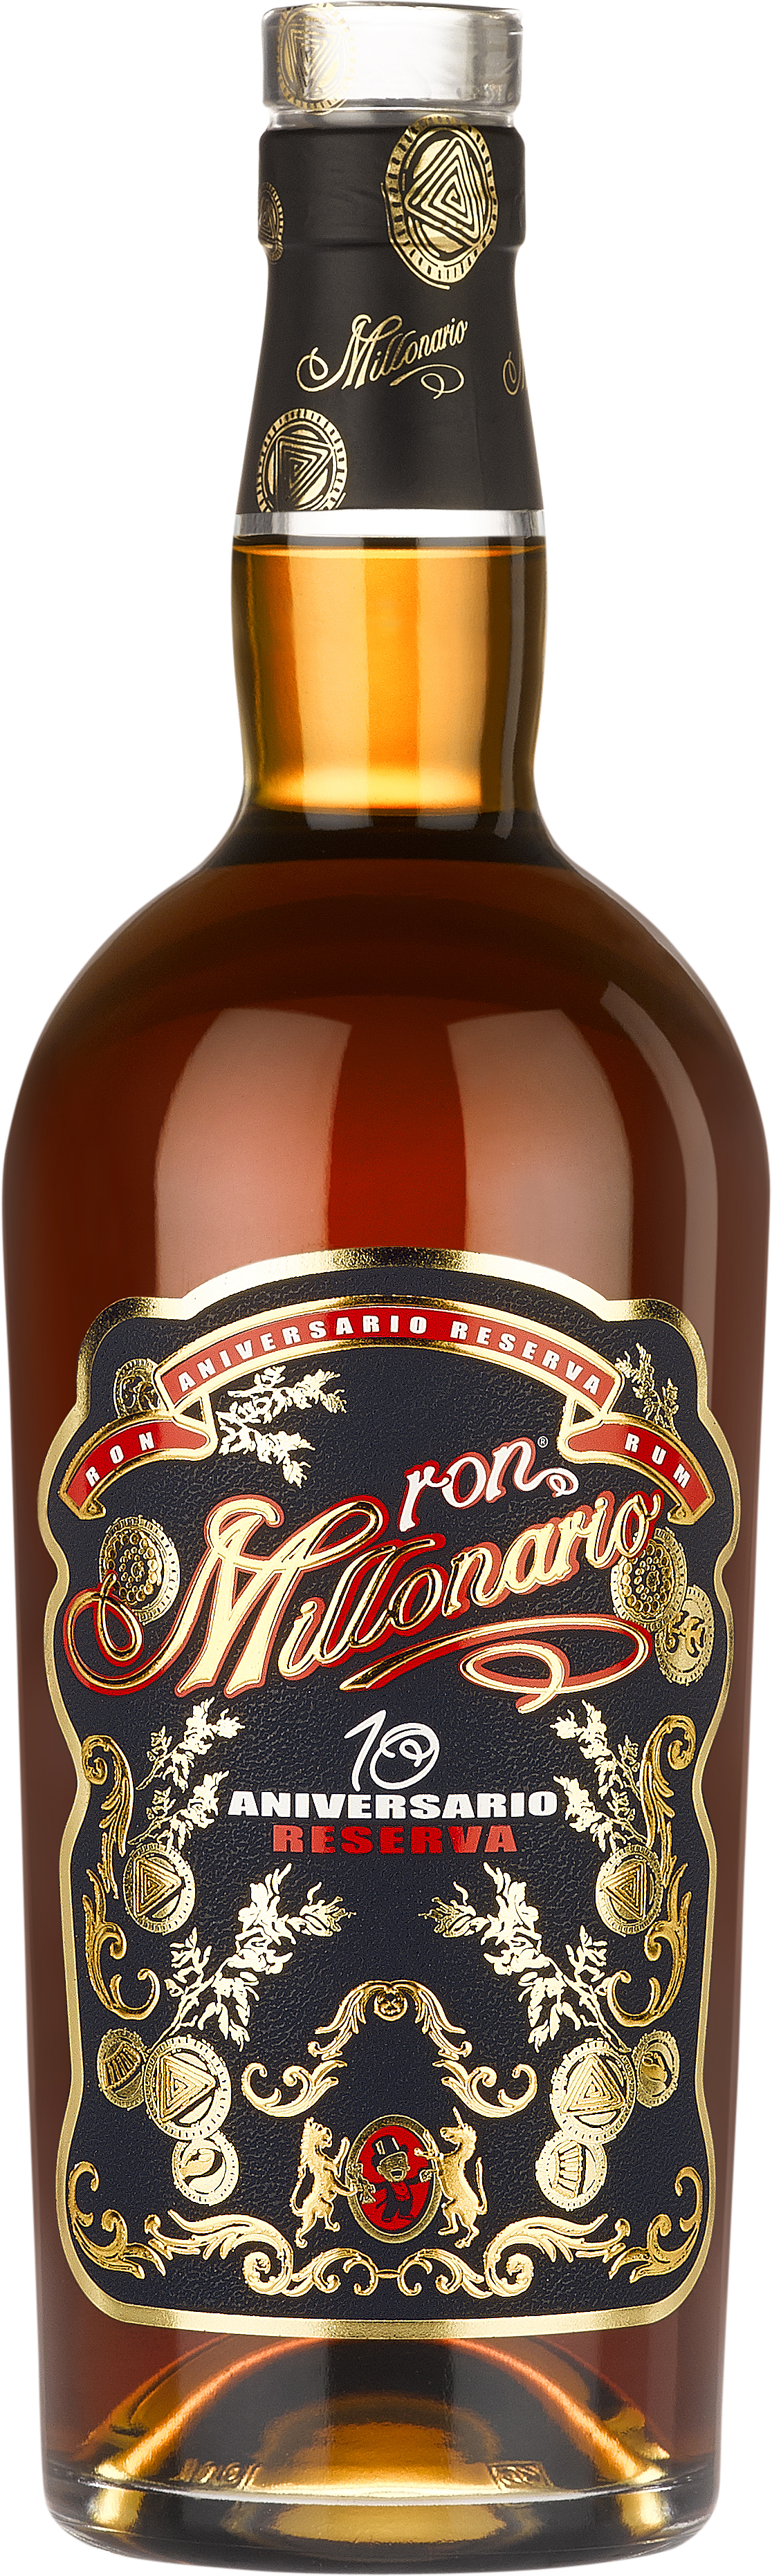 Ron Millonario 10 Aniversaro Reserva, 40% Vol. 0,7 ltr. Rum aus Peru